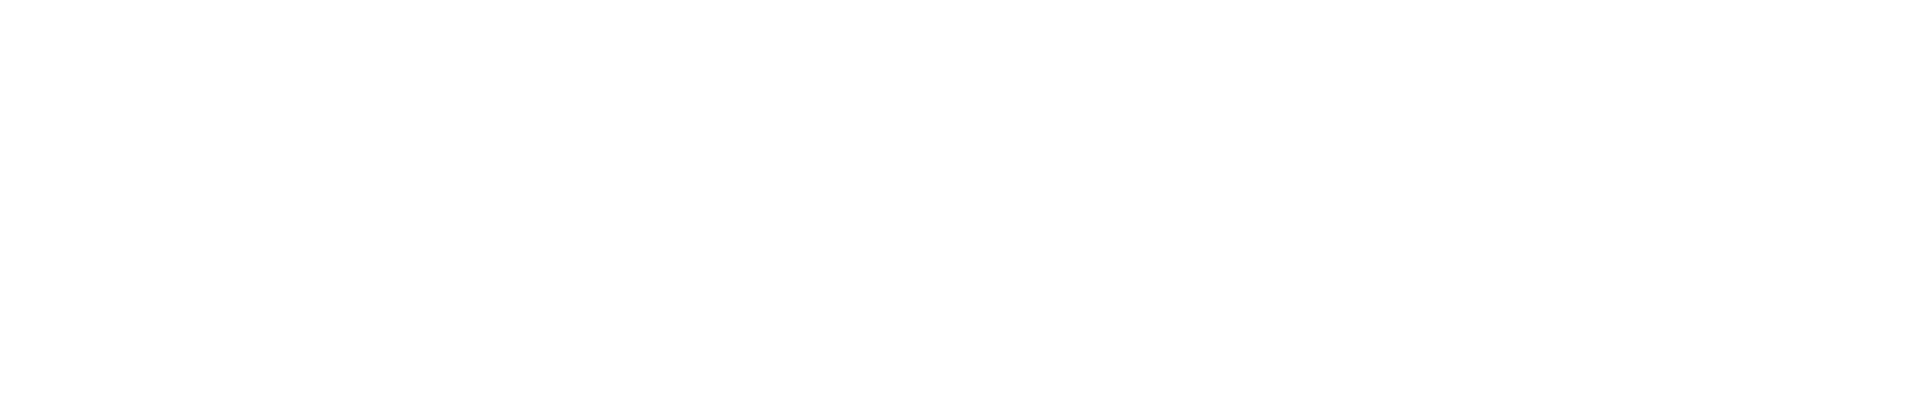 Third KUHL Mountains black, white, gray vector